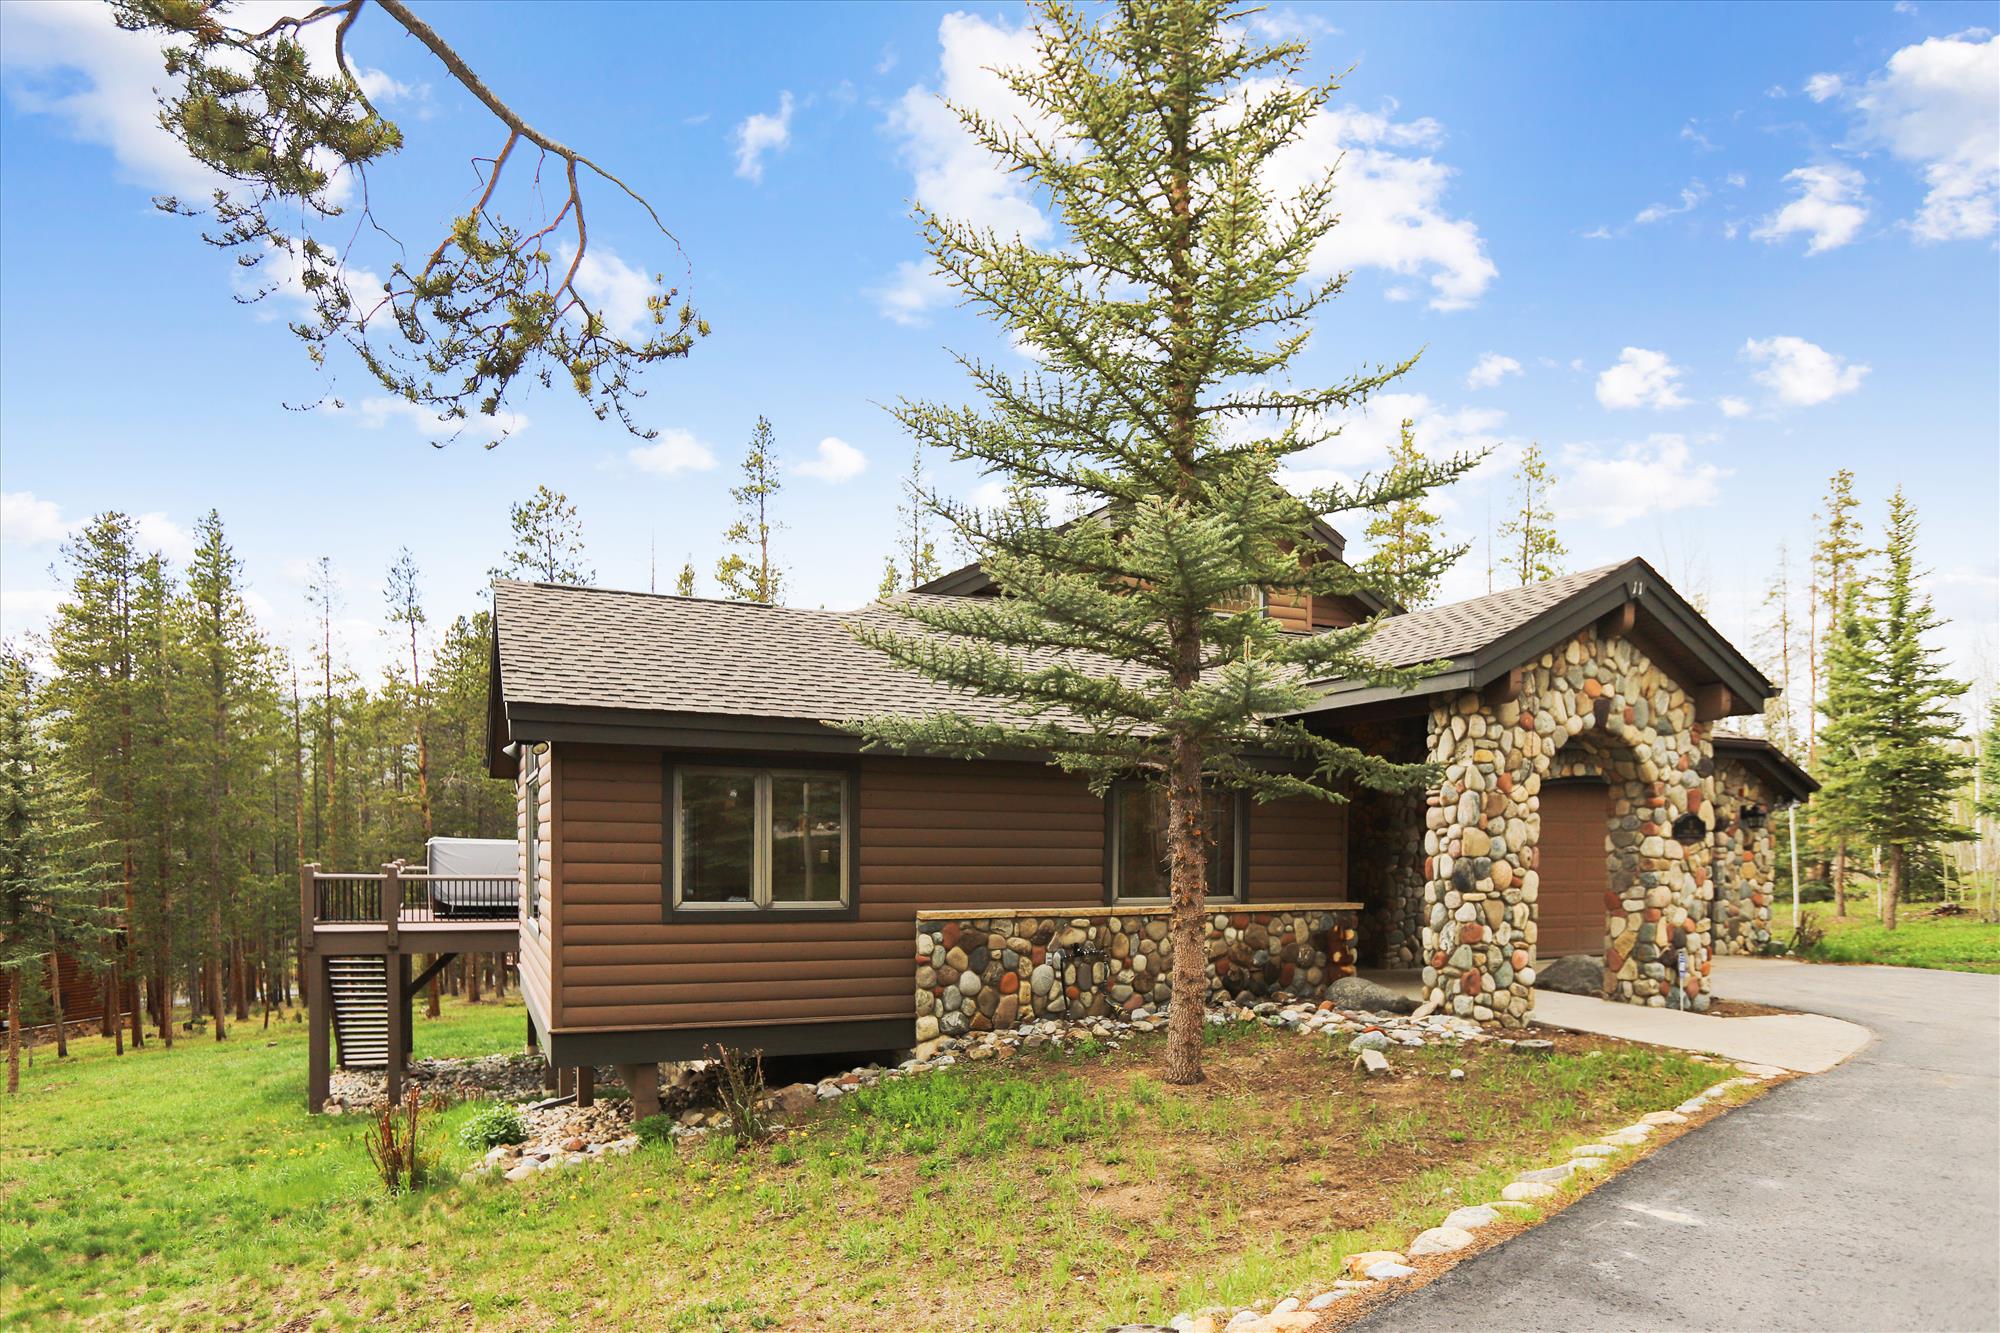 Side exterior view - Evergreen Lodge Breckenridge Vacation Rental